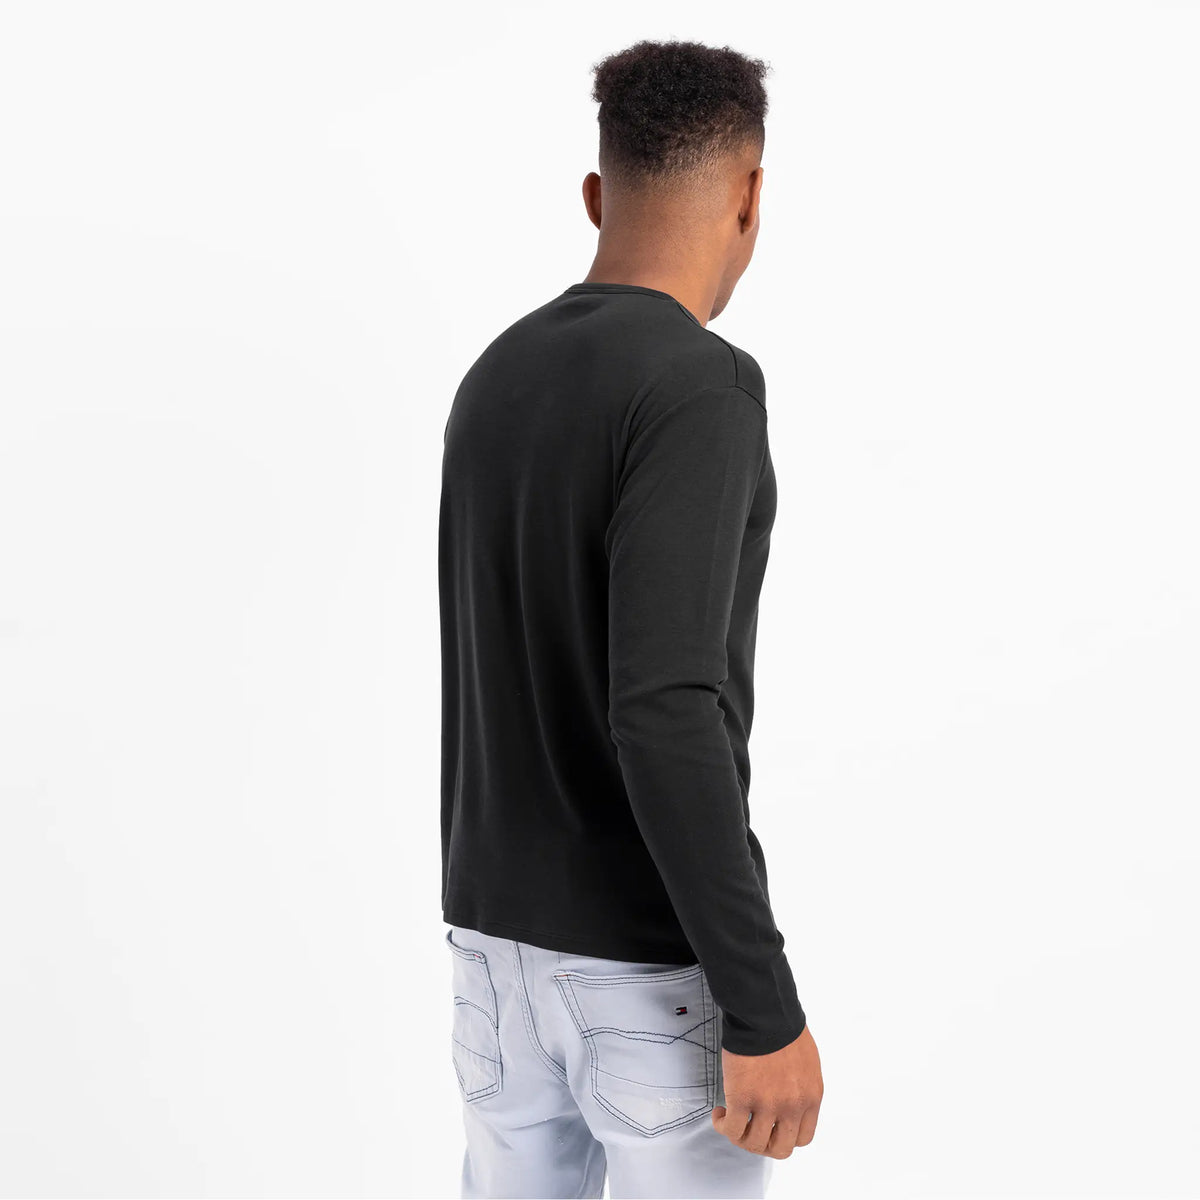 mens plain tshirt long sleeve color black